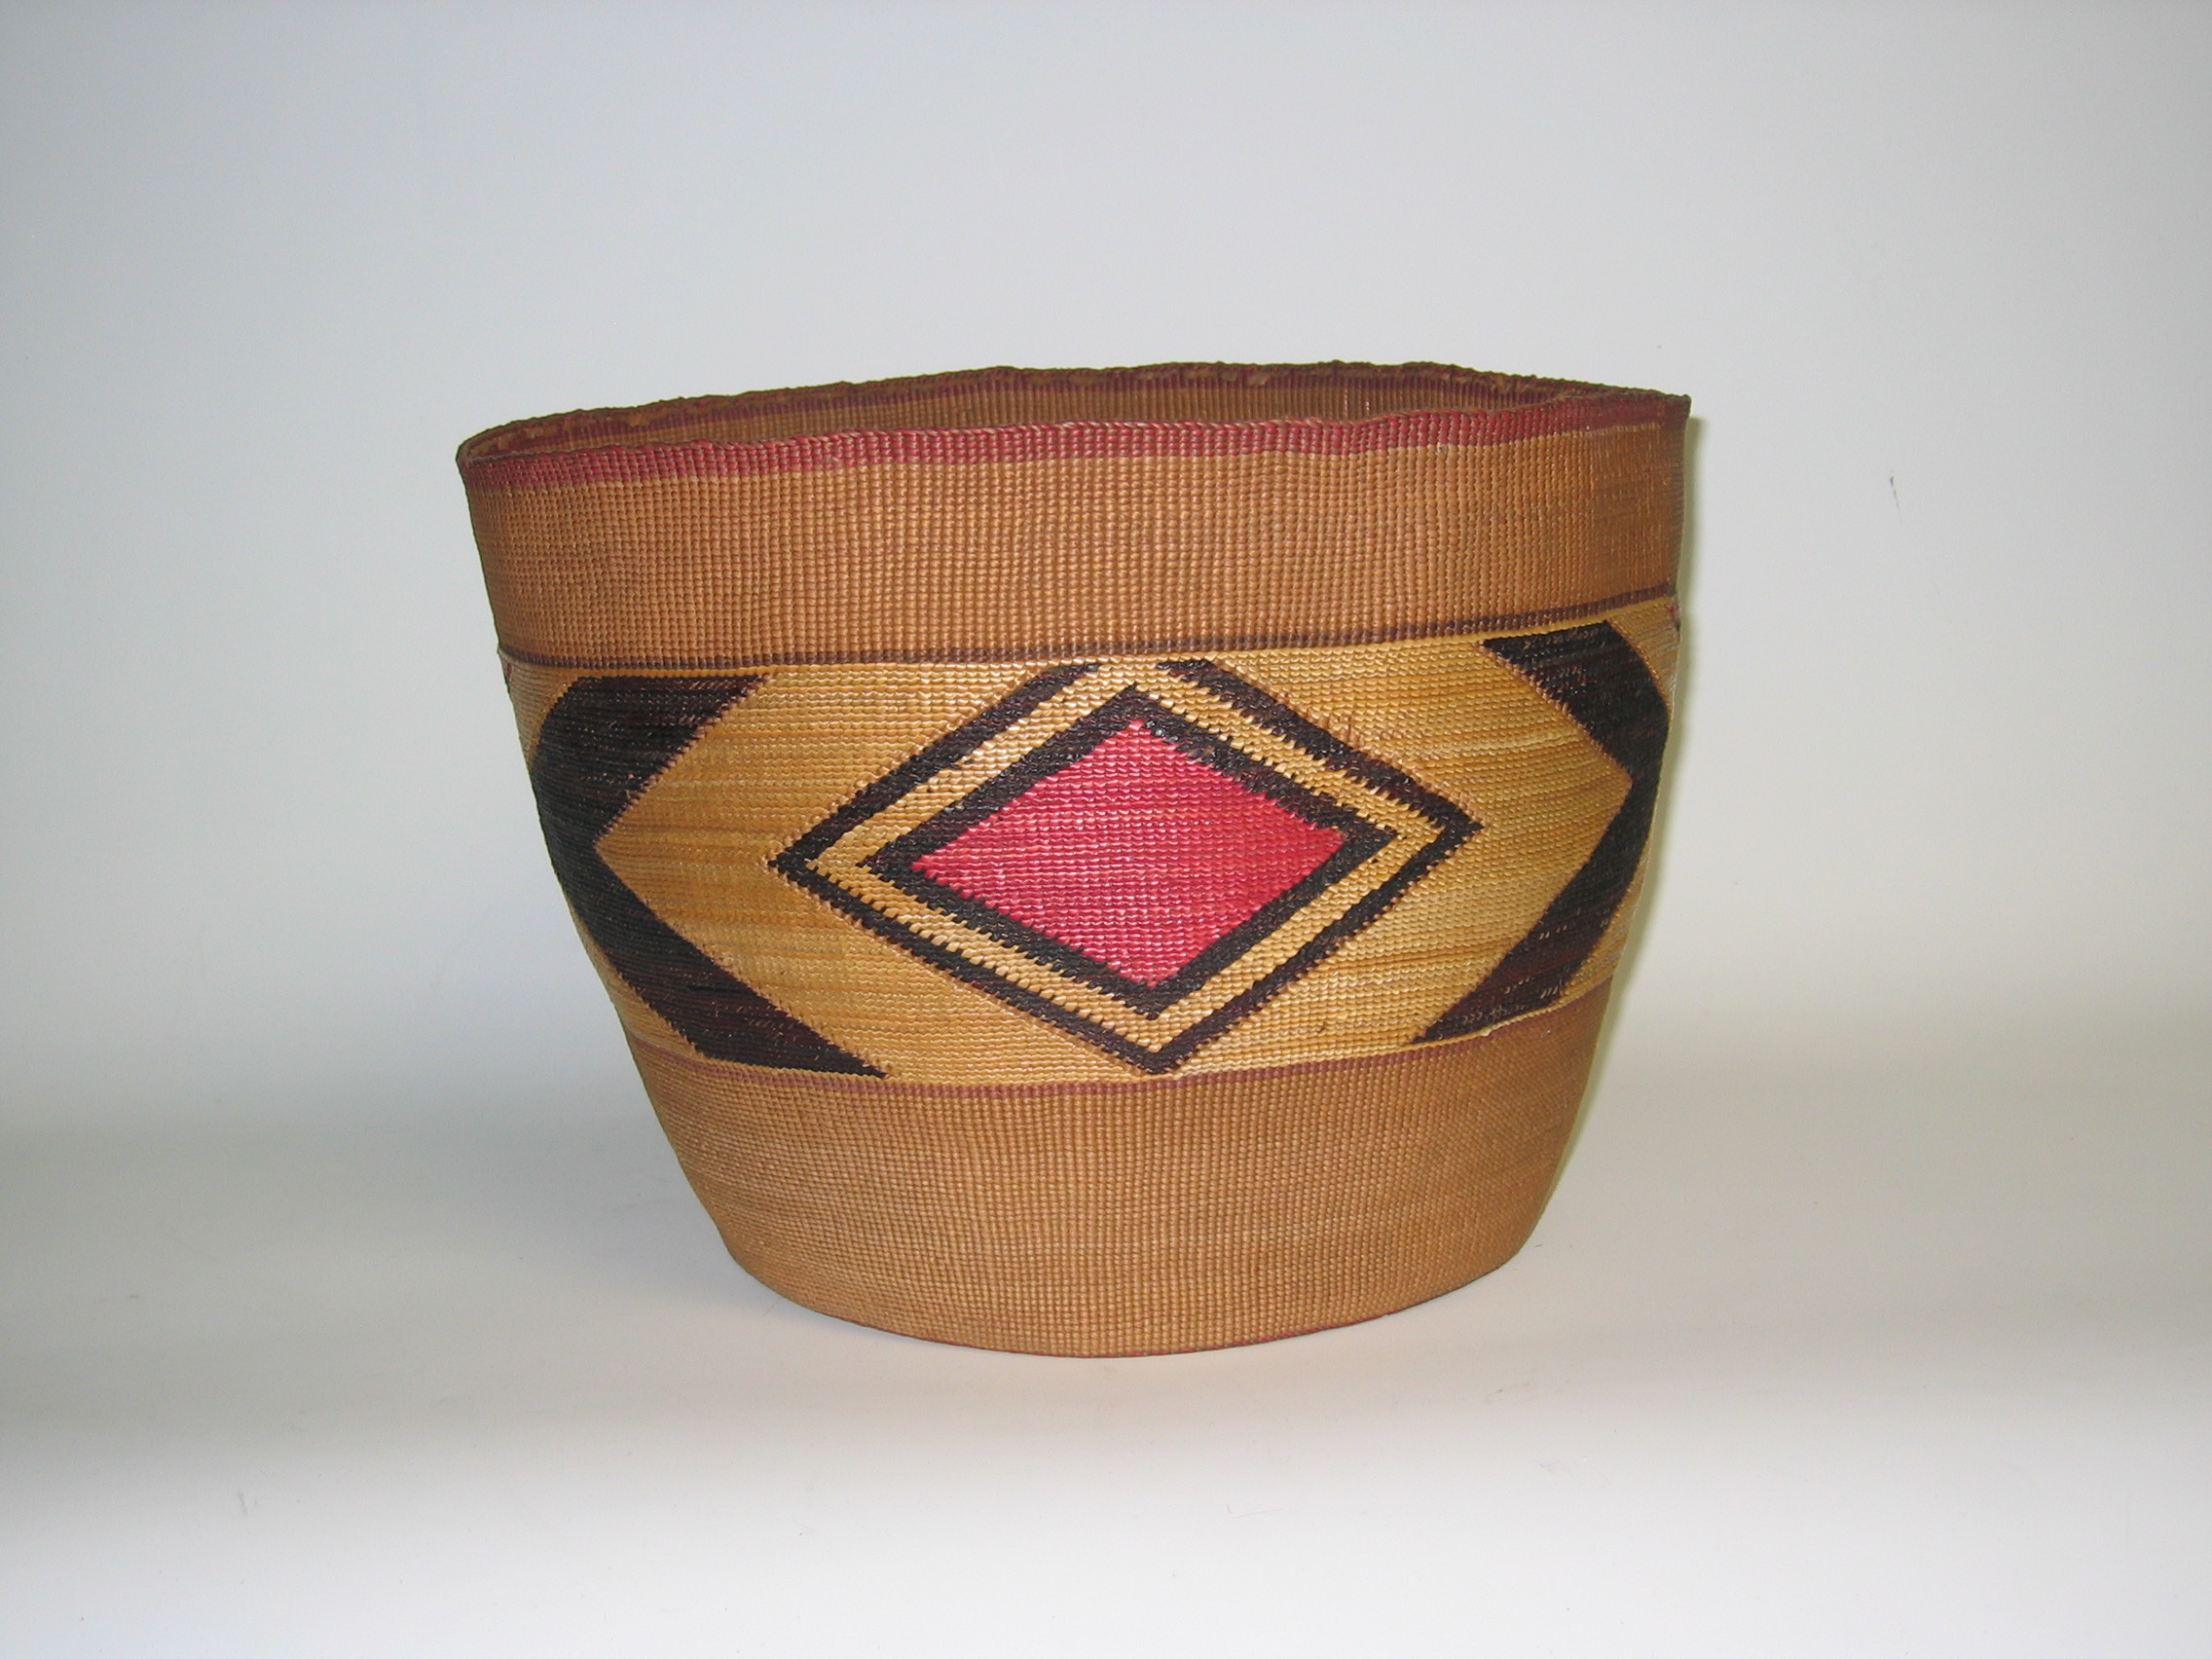 Tlingit Tribe / Northwest Coast Chevron / diamond storage basket, late 19th Century, early 20th Century